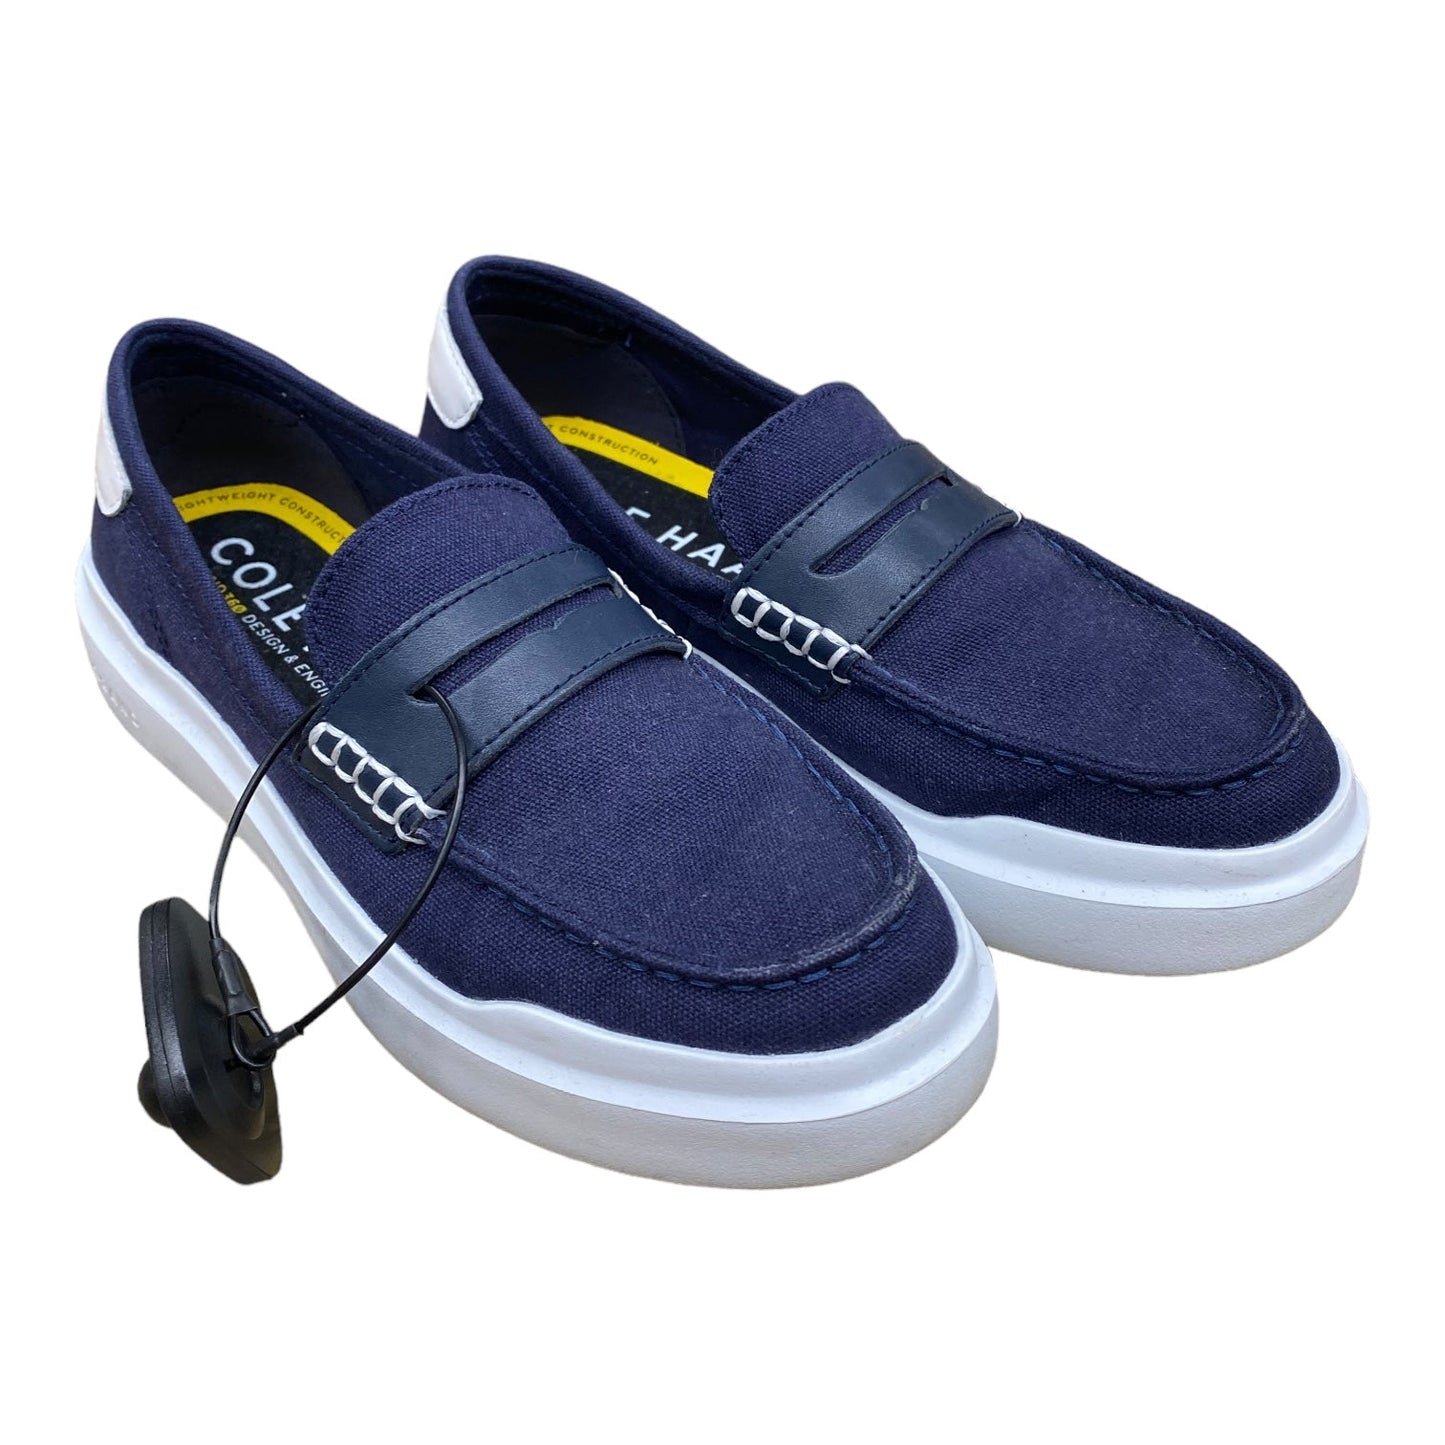 Blue & White Shoes Flats Cole-haan, Size 7